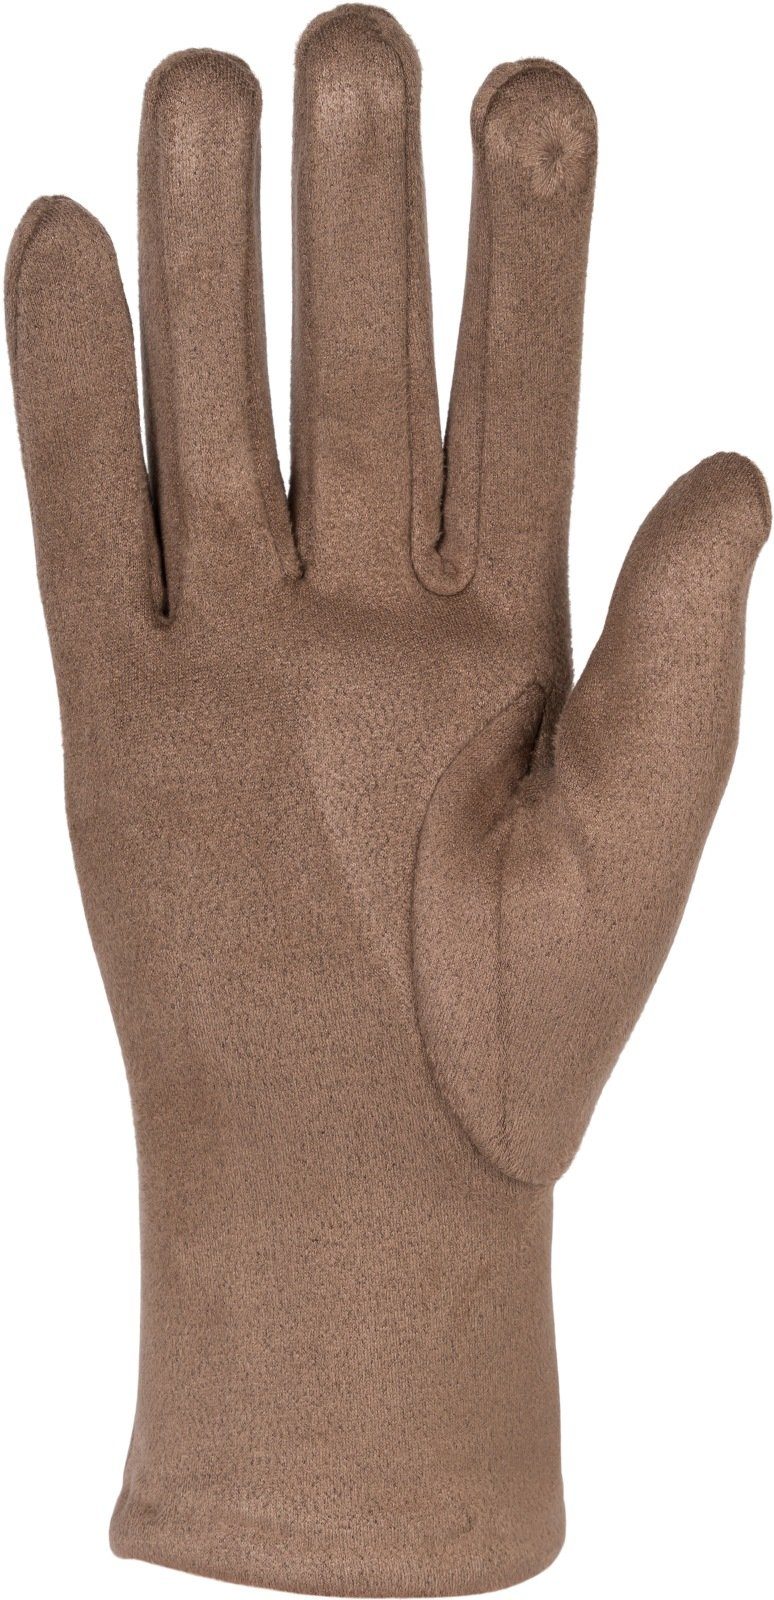 styleBREAKER Fleecehandschuhe Einfarbige Touchscreen Handschuhe Taupe Ziernähte